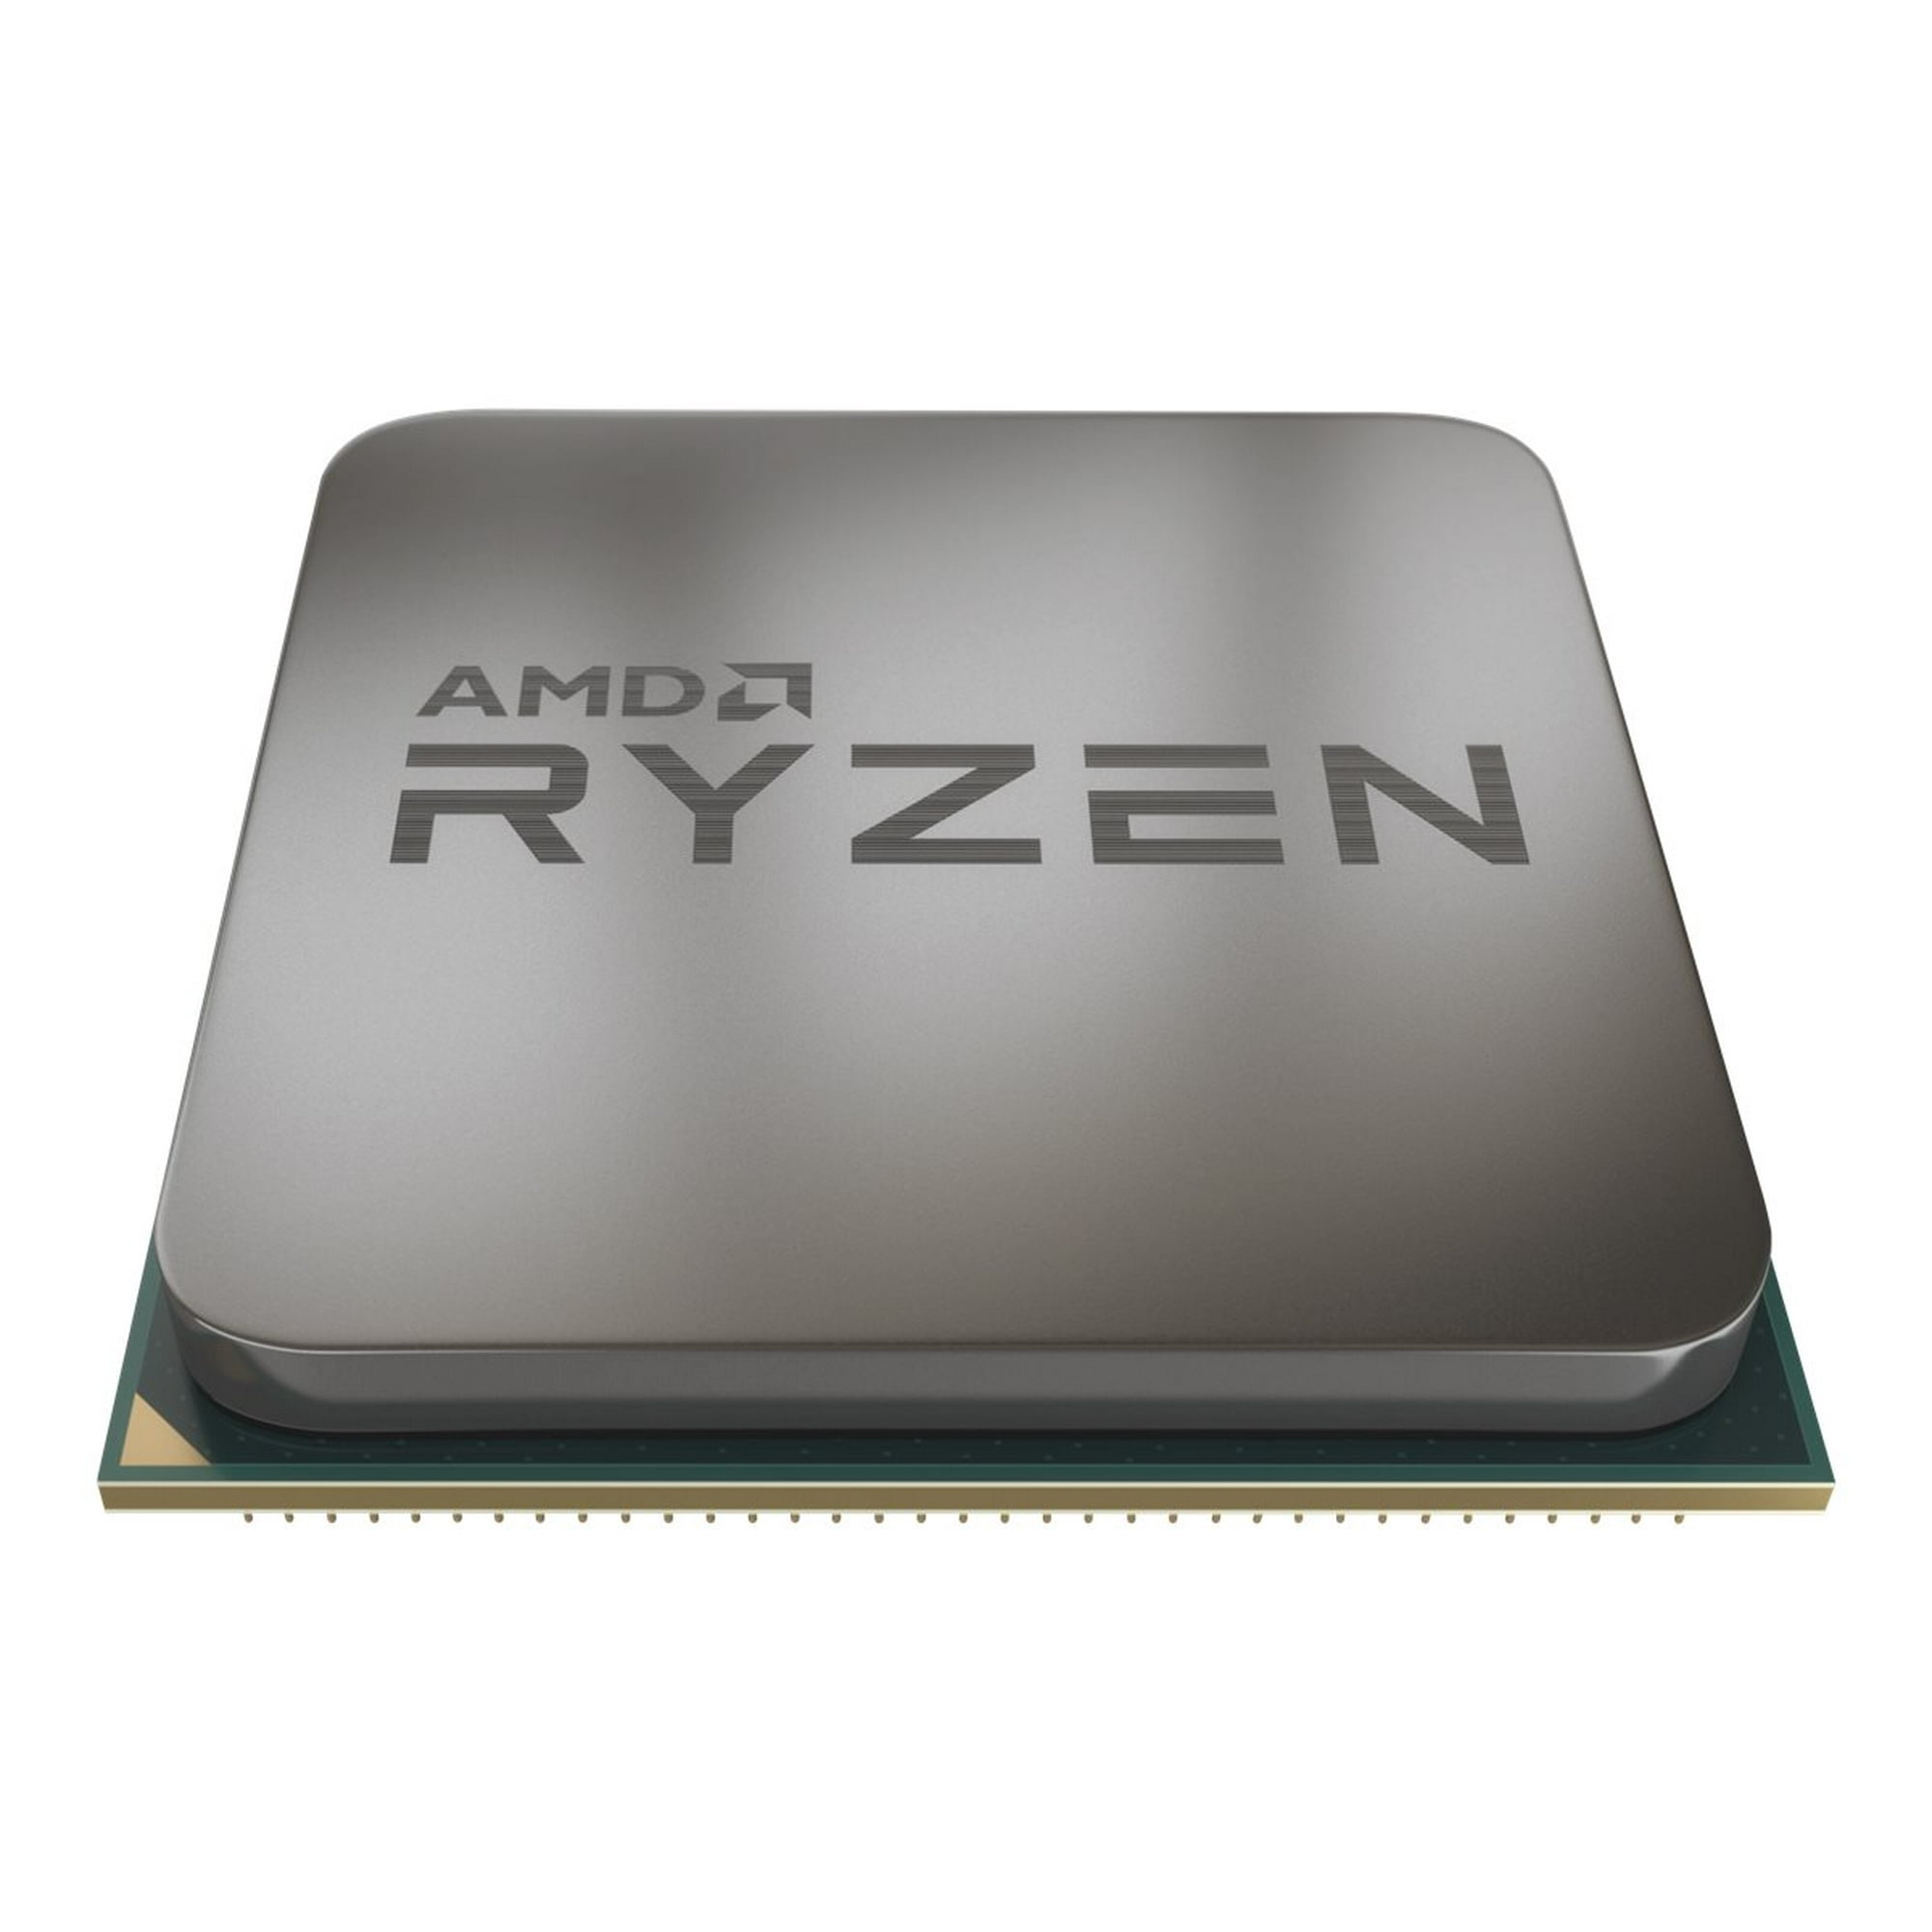 AMD Ryzen 9 3900X - 3.8 GHz - 12-core - 24 threads - 64 MB cache